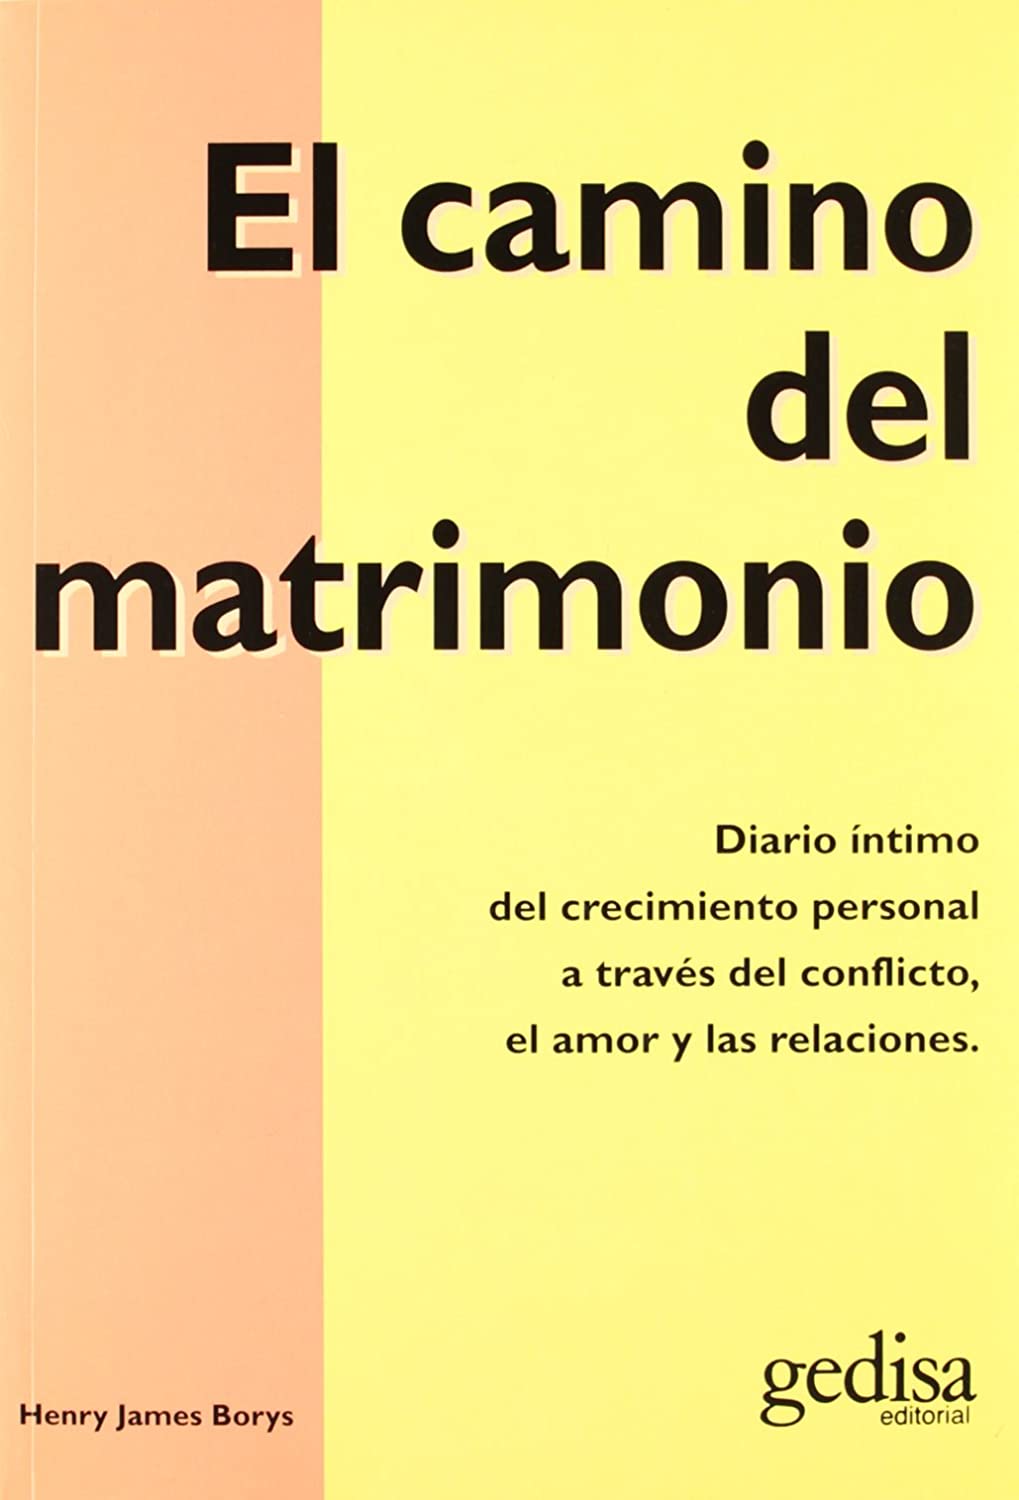 El camino del matrimonio (Spanish Edition)